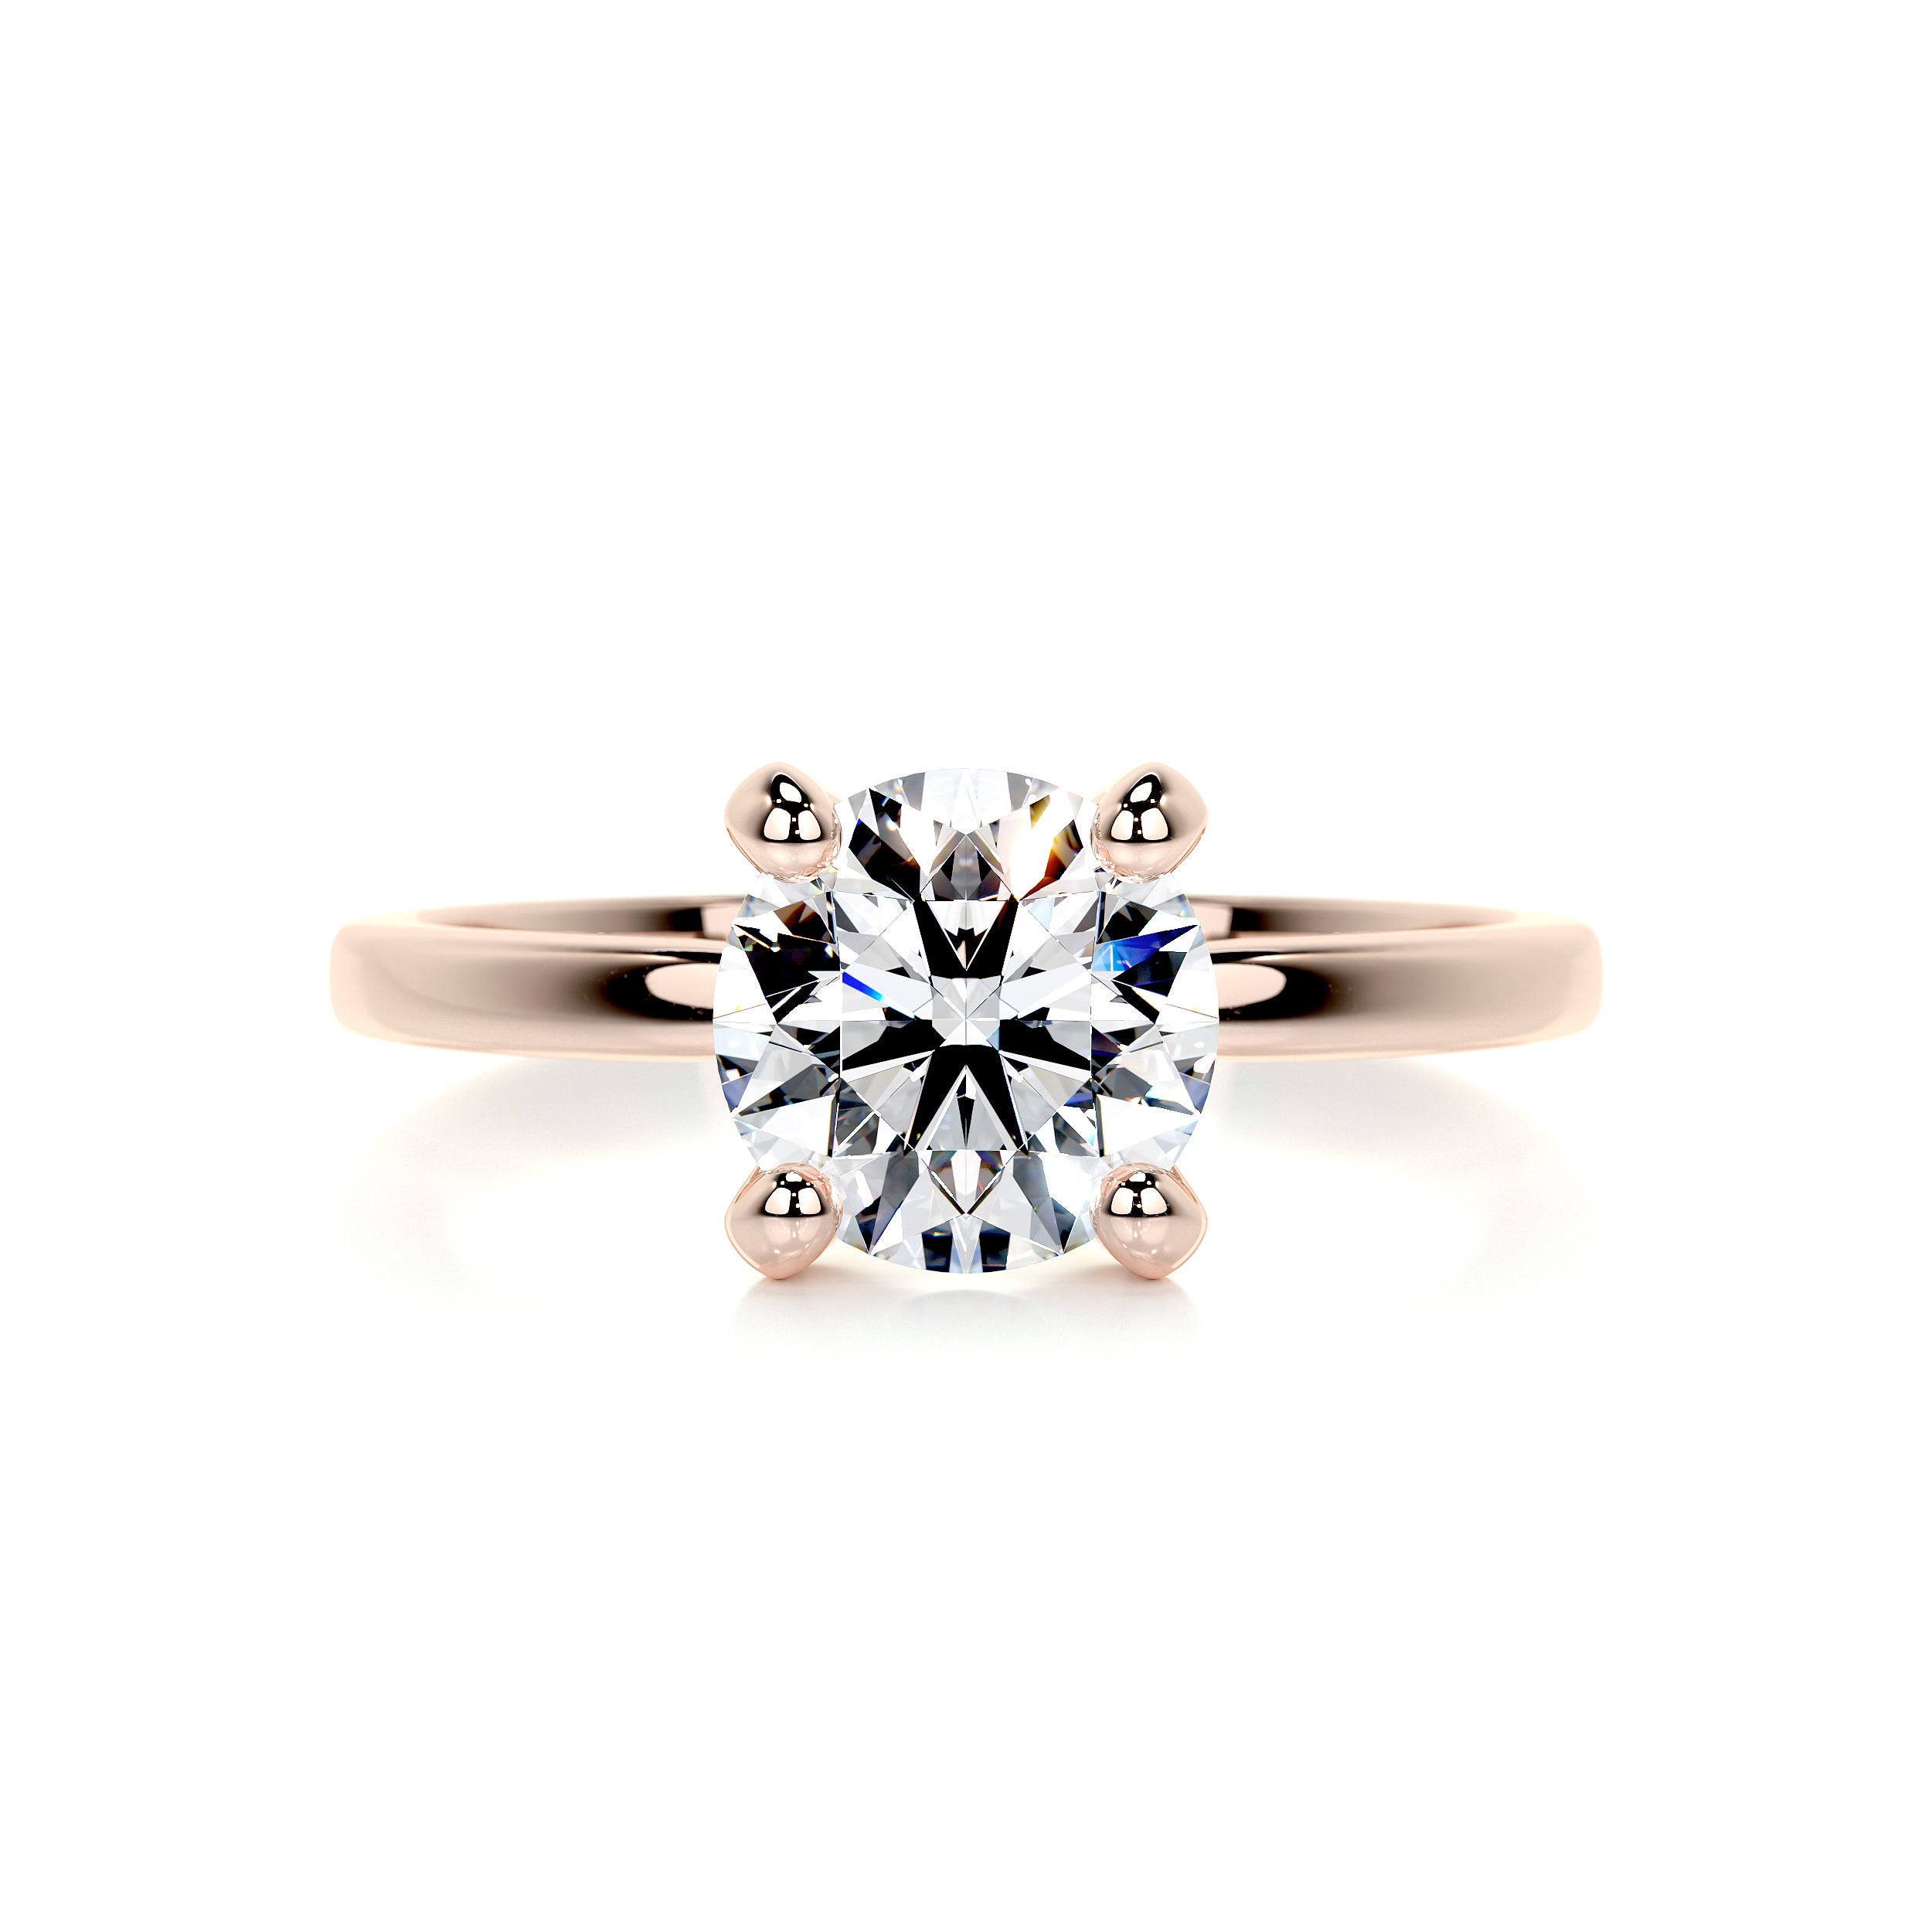 Jessica Diamond Engagement Ring   (1.5 Carat) -14K Rose Gold